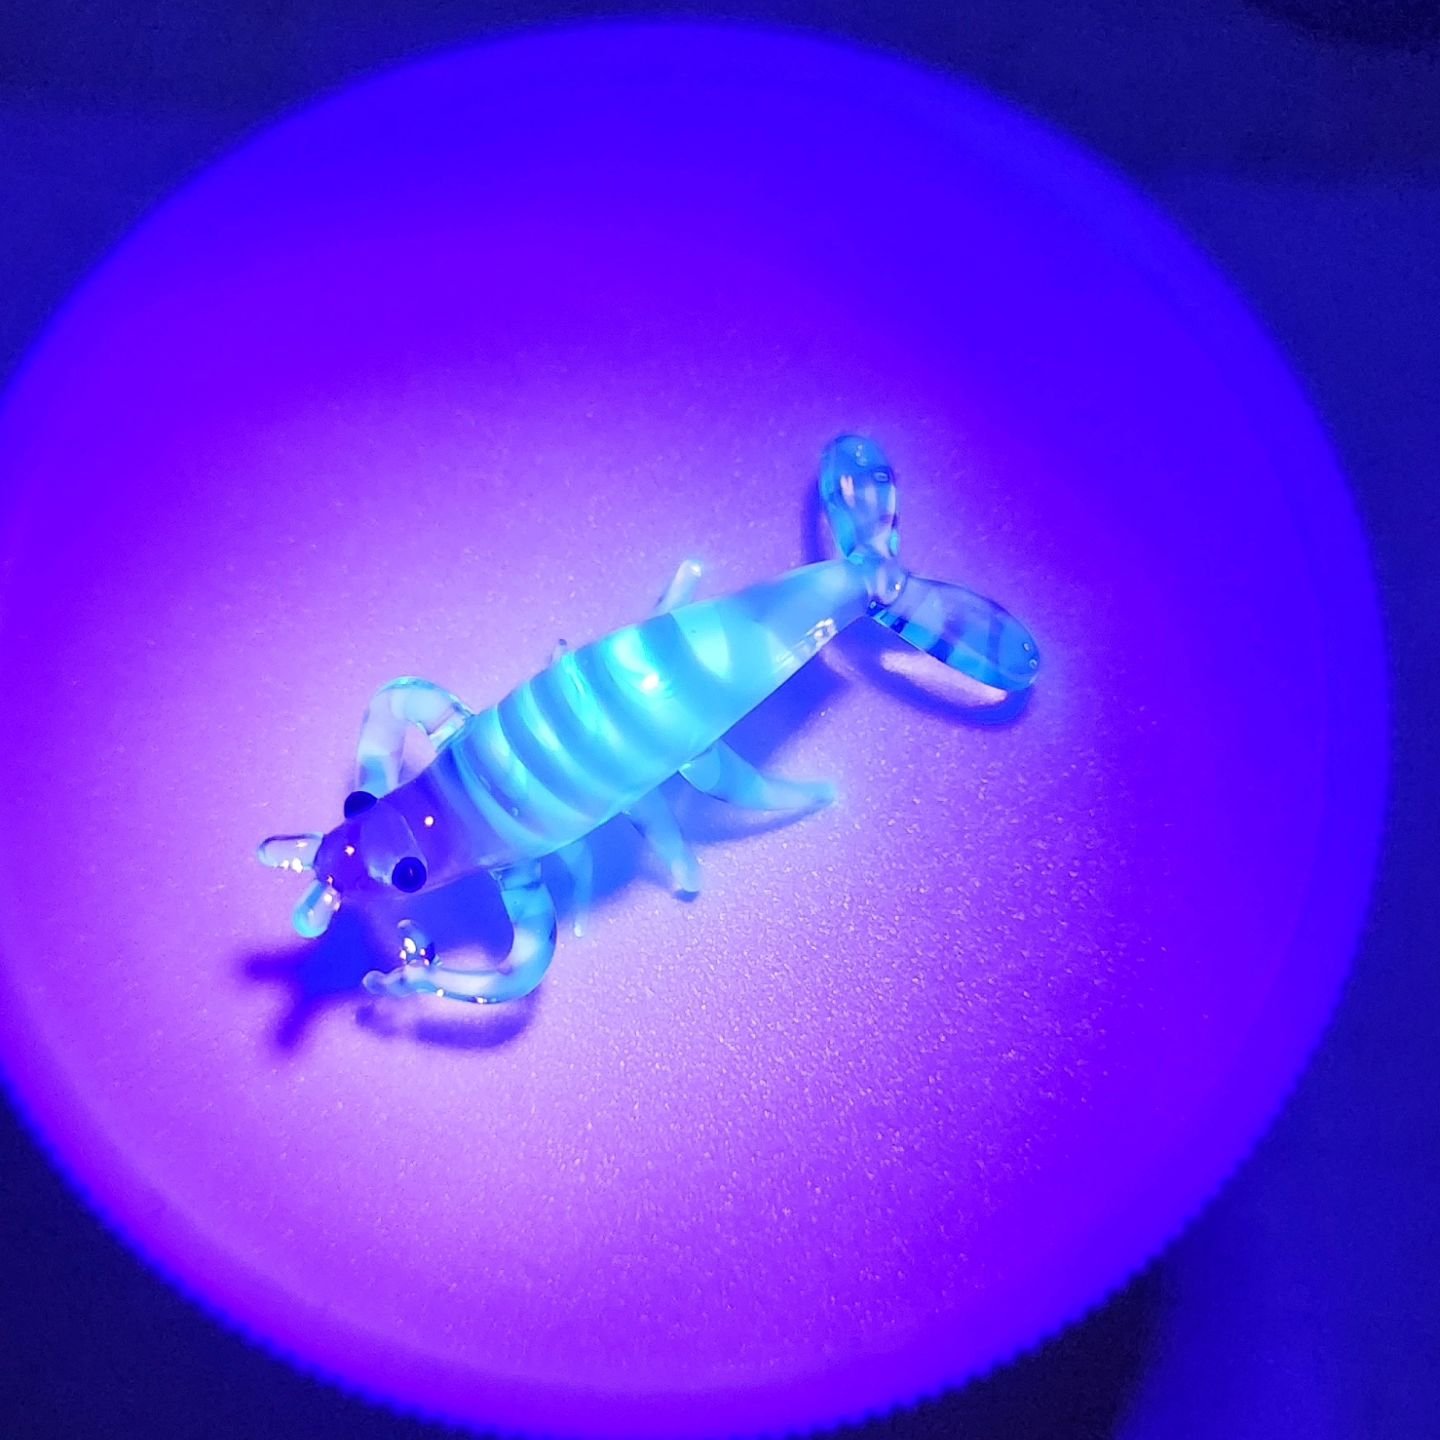 Mystique+Luna swirl shrimp 🦐 🍥 UV reactive
#shrimp #🦐 #glassart #tinyglass #glassanimals #glasscollector #glassartist #boro #uv #uvreactive #blacklight #lampwork